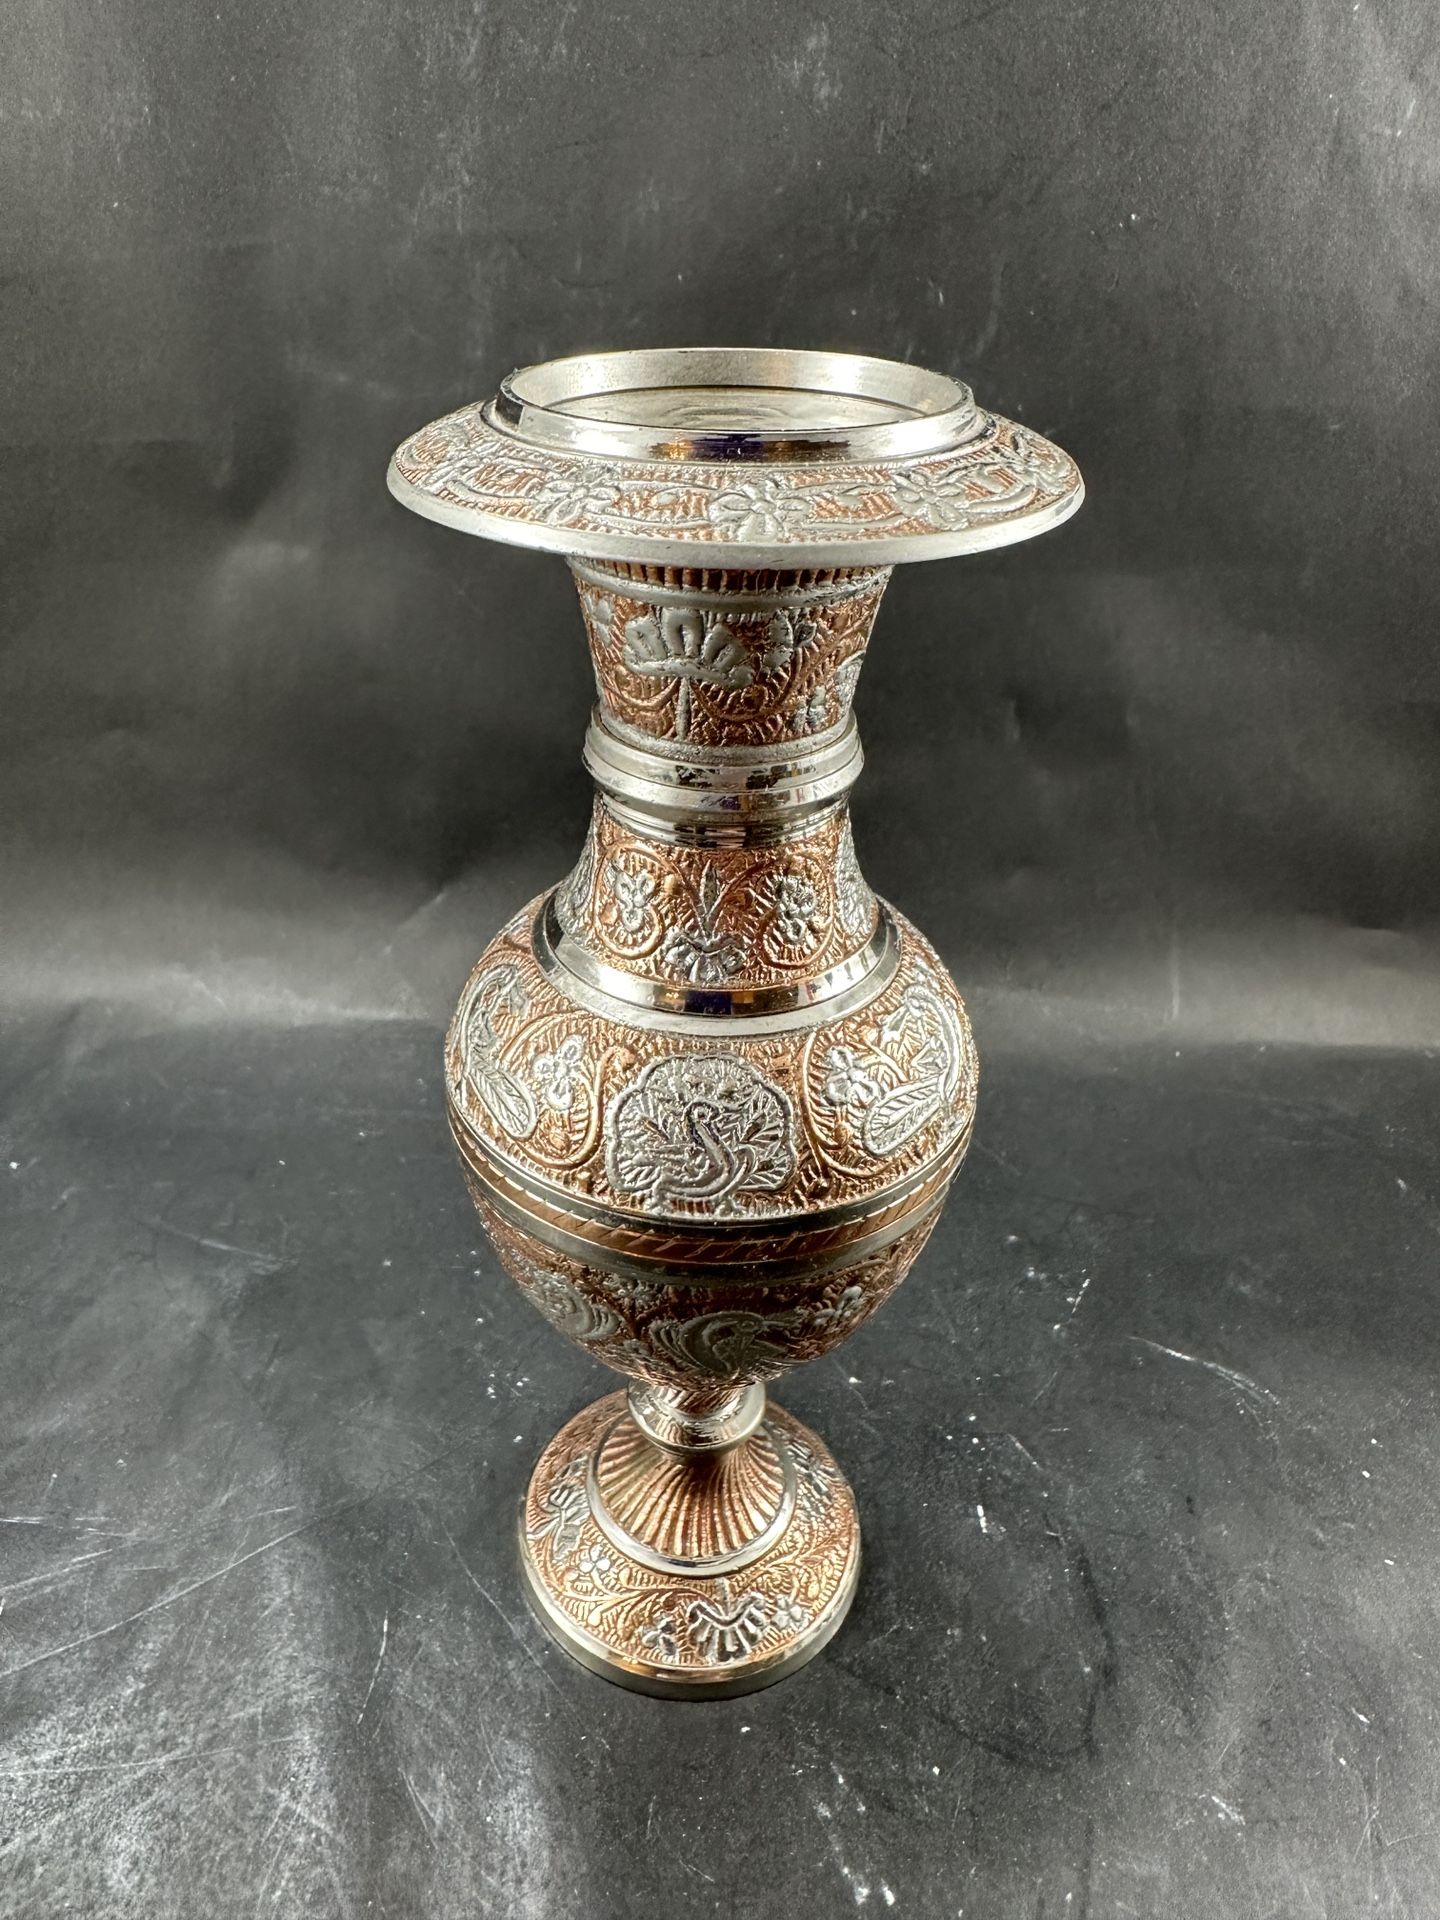 Vintage Persian Style Engraved Silver & Copper Floral Vase